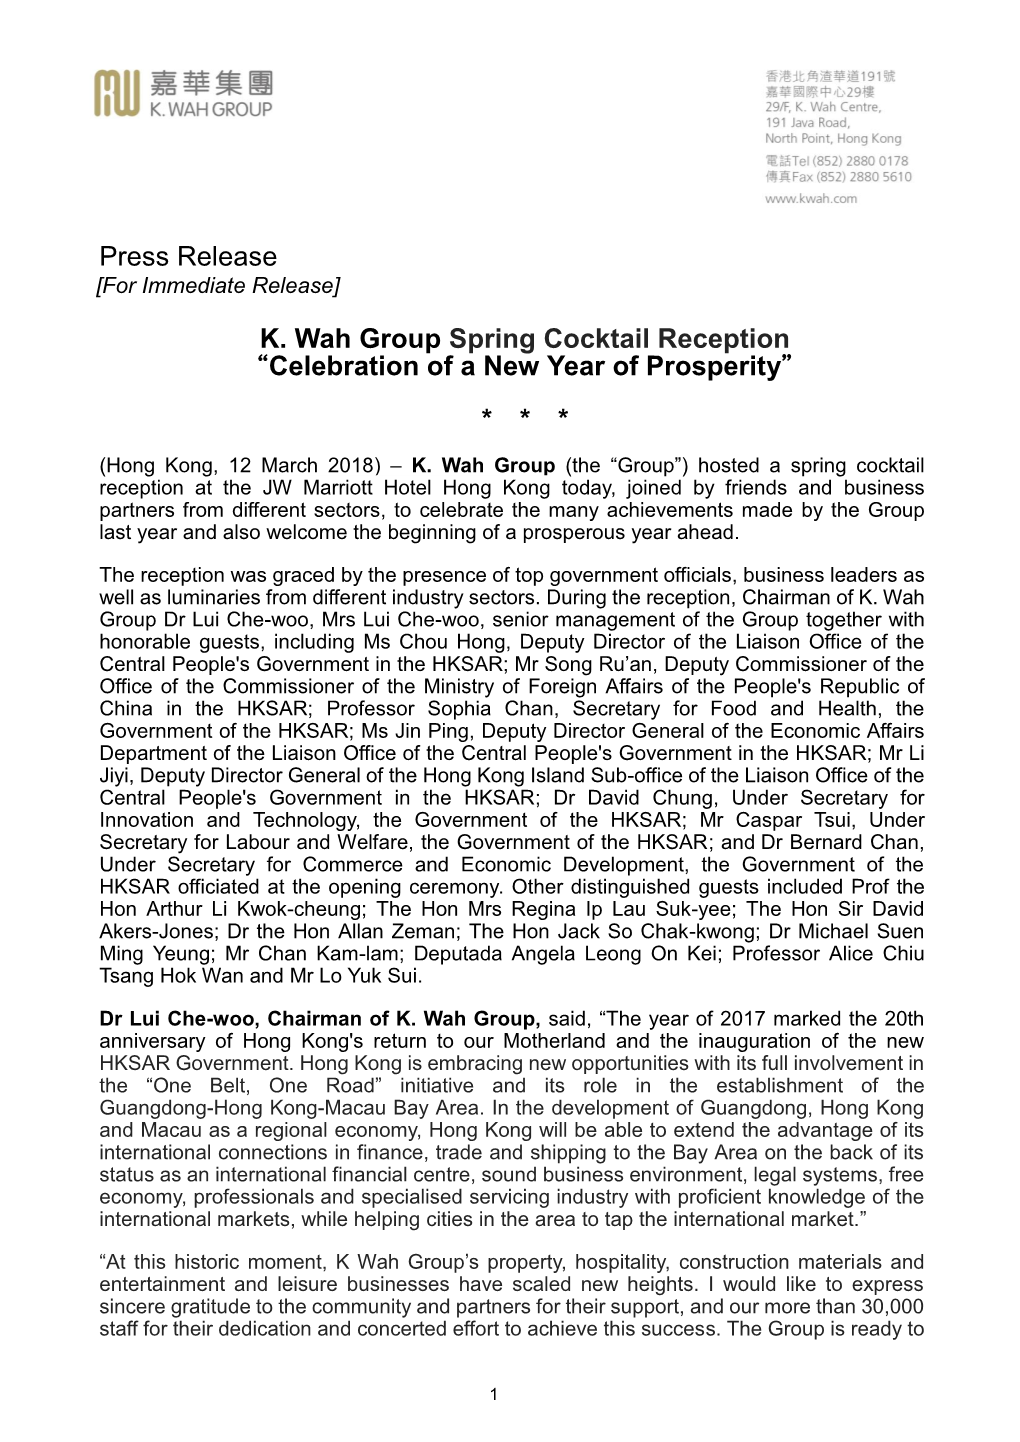 Press Release K. Wah Group Spring Cocktail Reception “Celebration Of